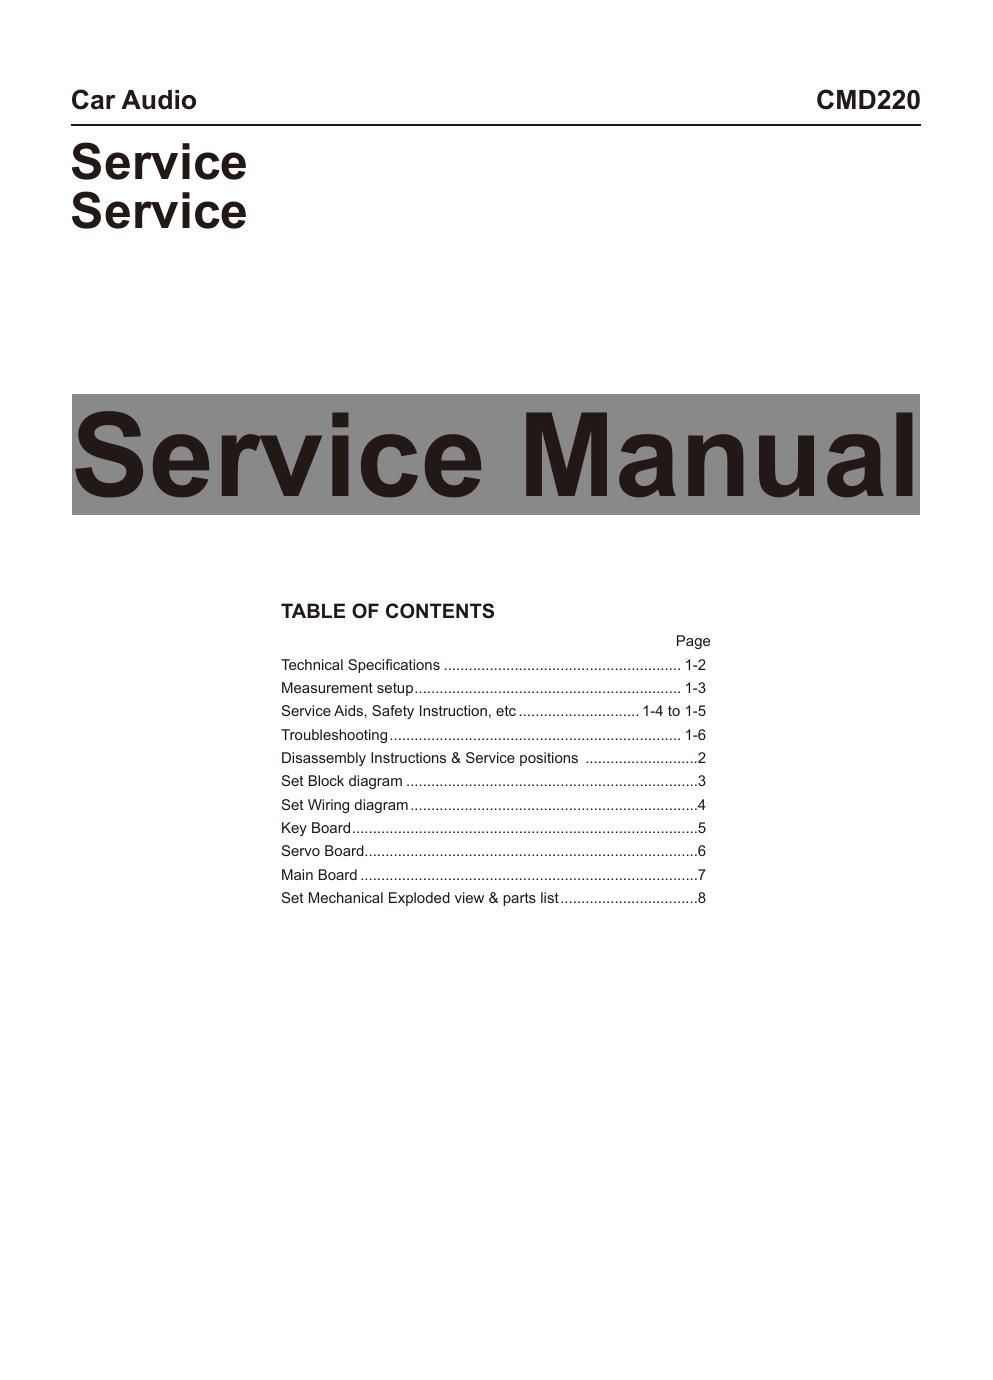 prology cmd 220 service manual